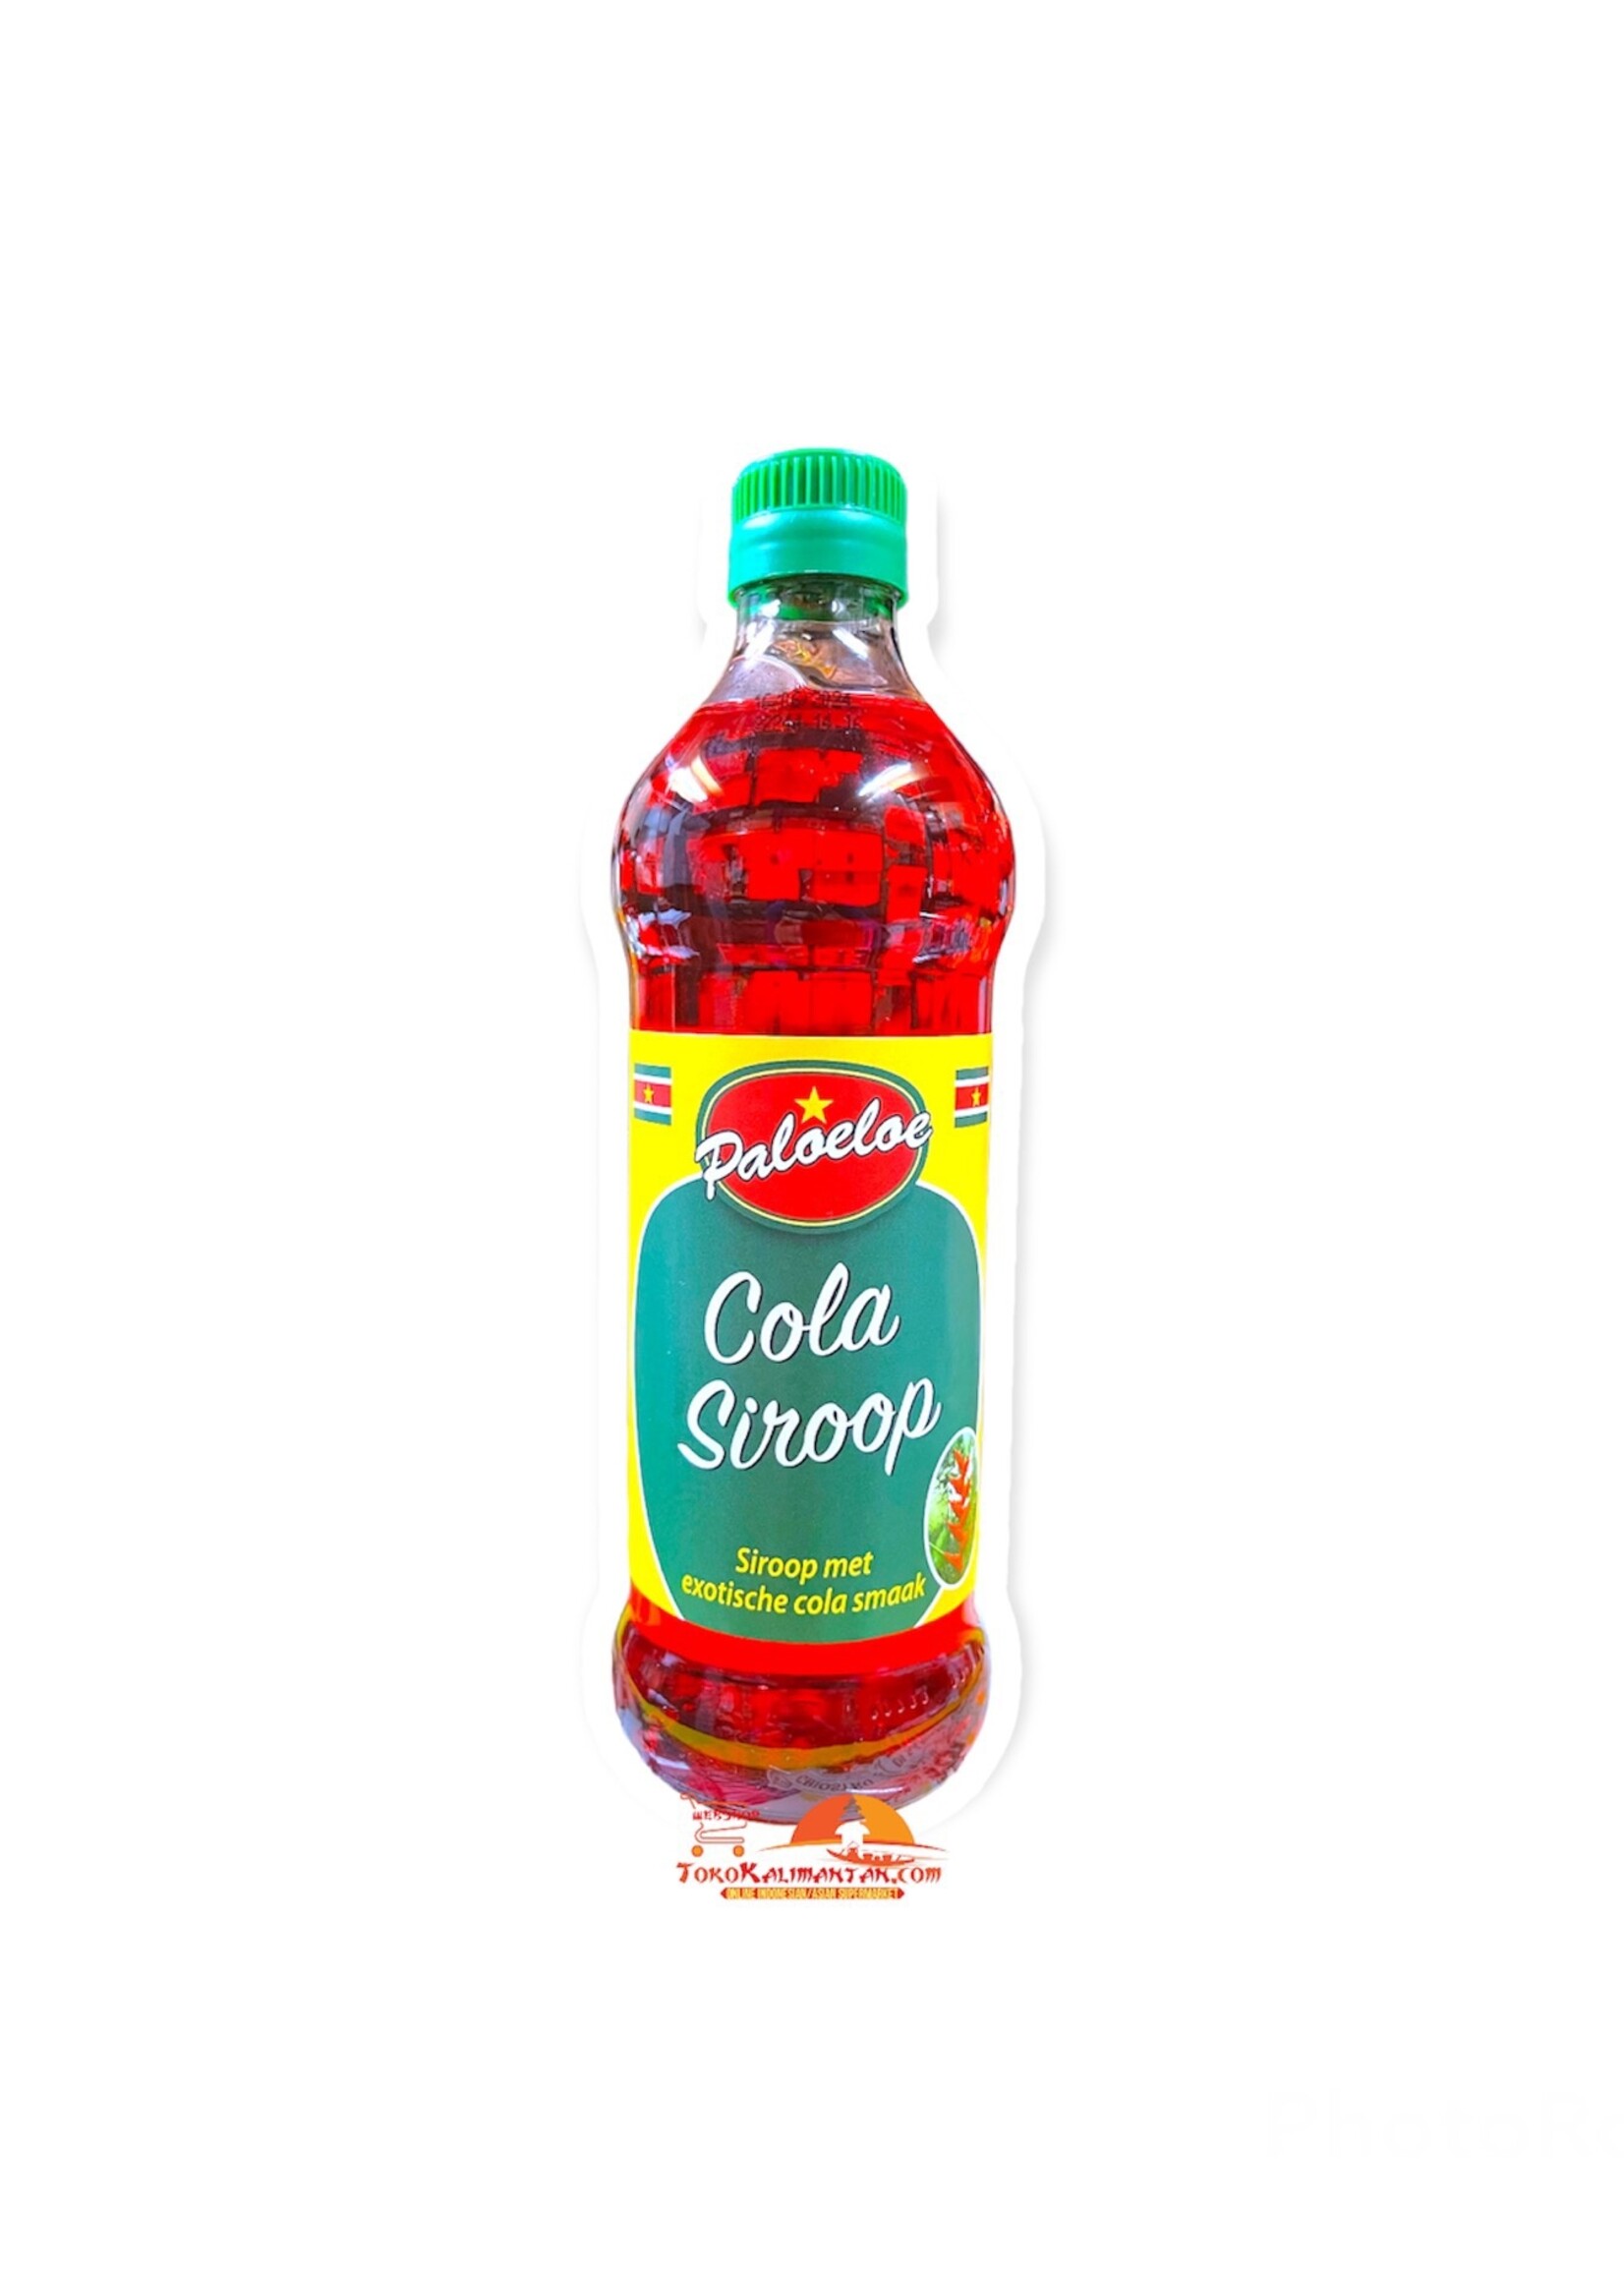 Paloeloe Paloeloe - Cola Siroop